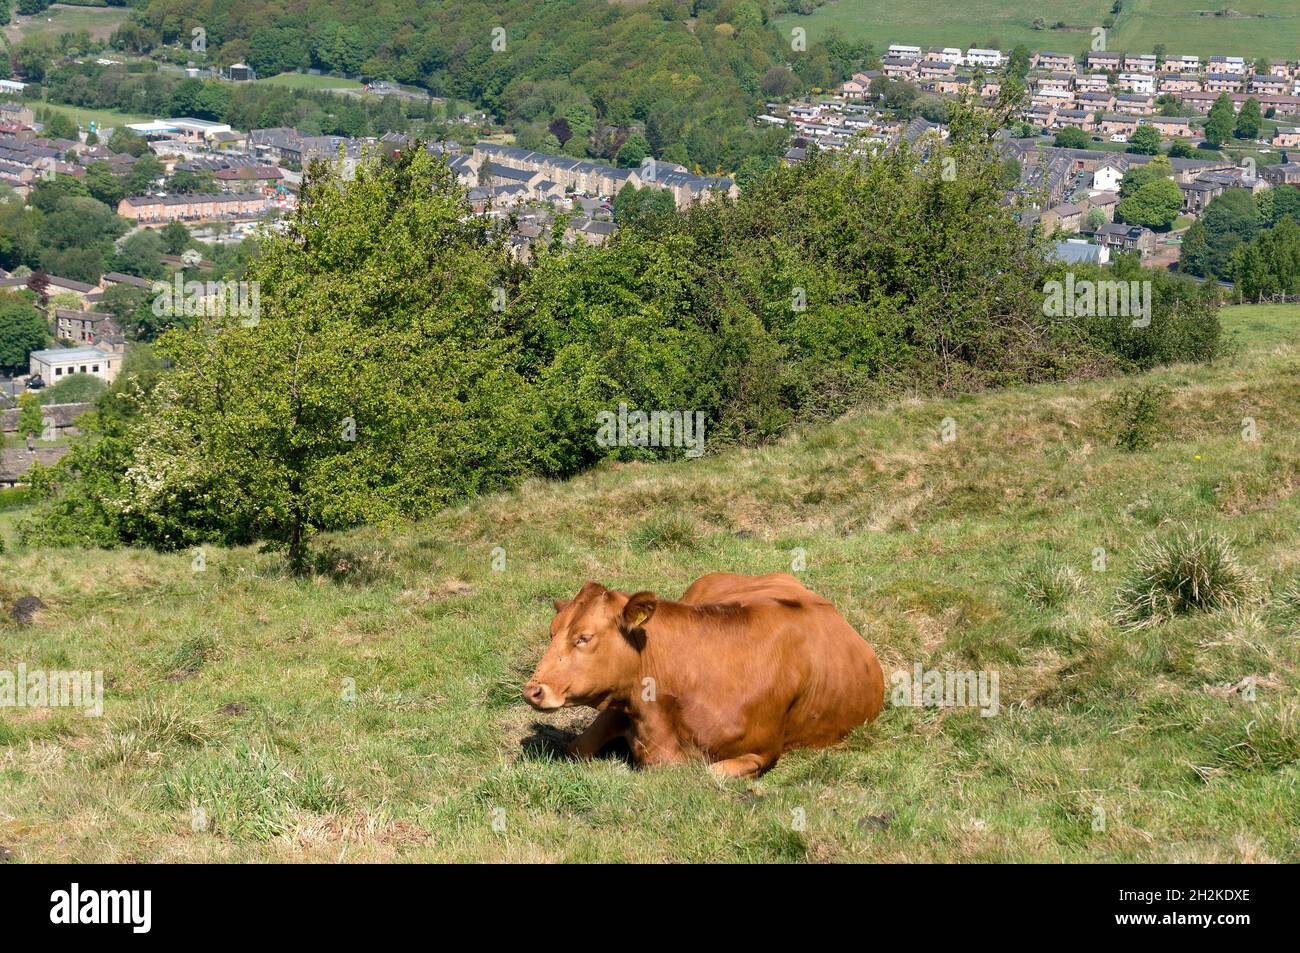 Kuh, die auf einem Hügel in Cragg-vales, Mytholmroyd, West Yorkshire, sitzt Stockfoto